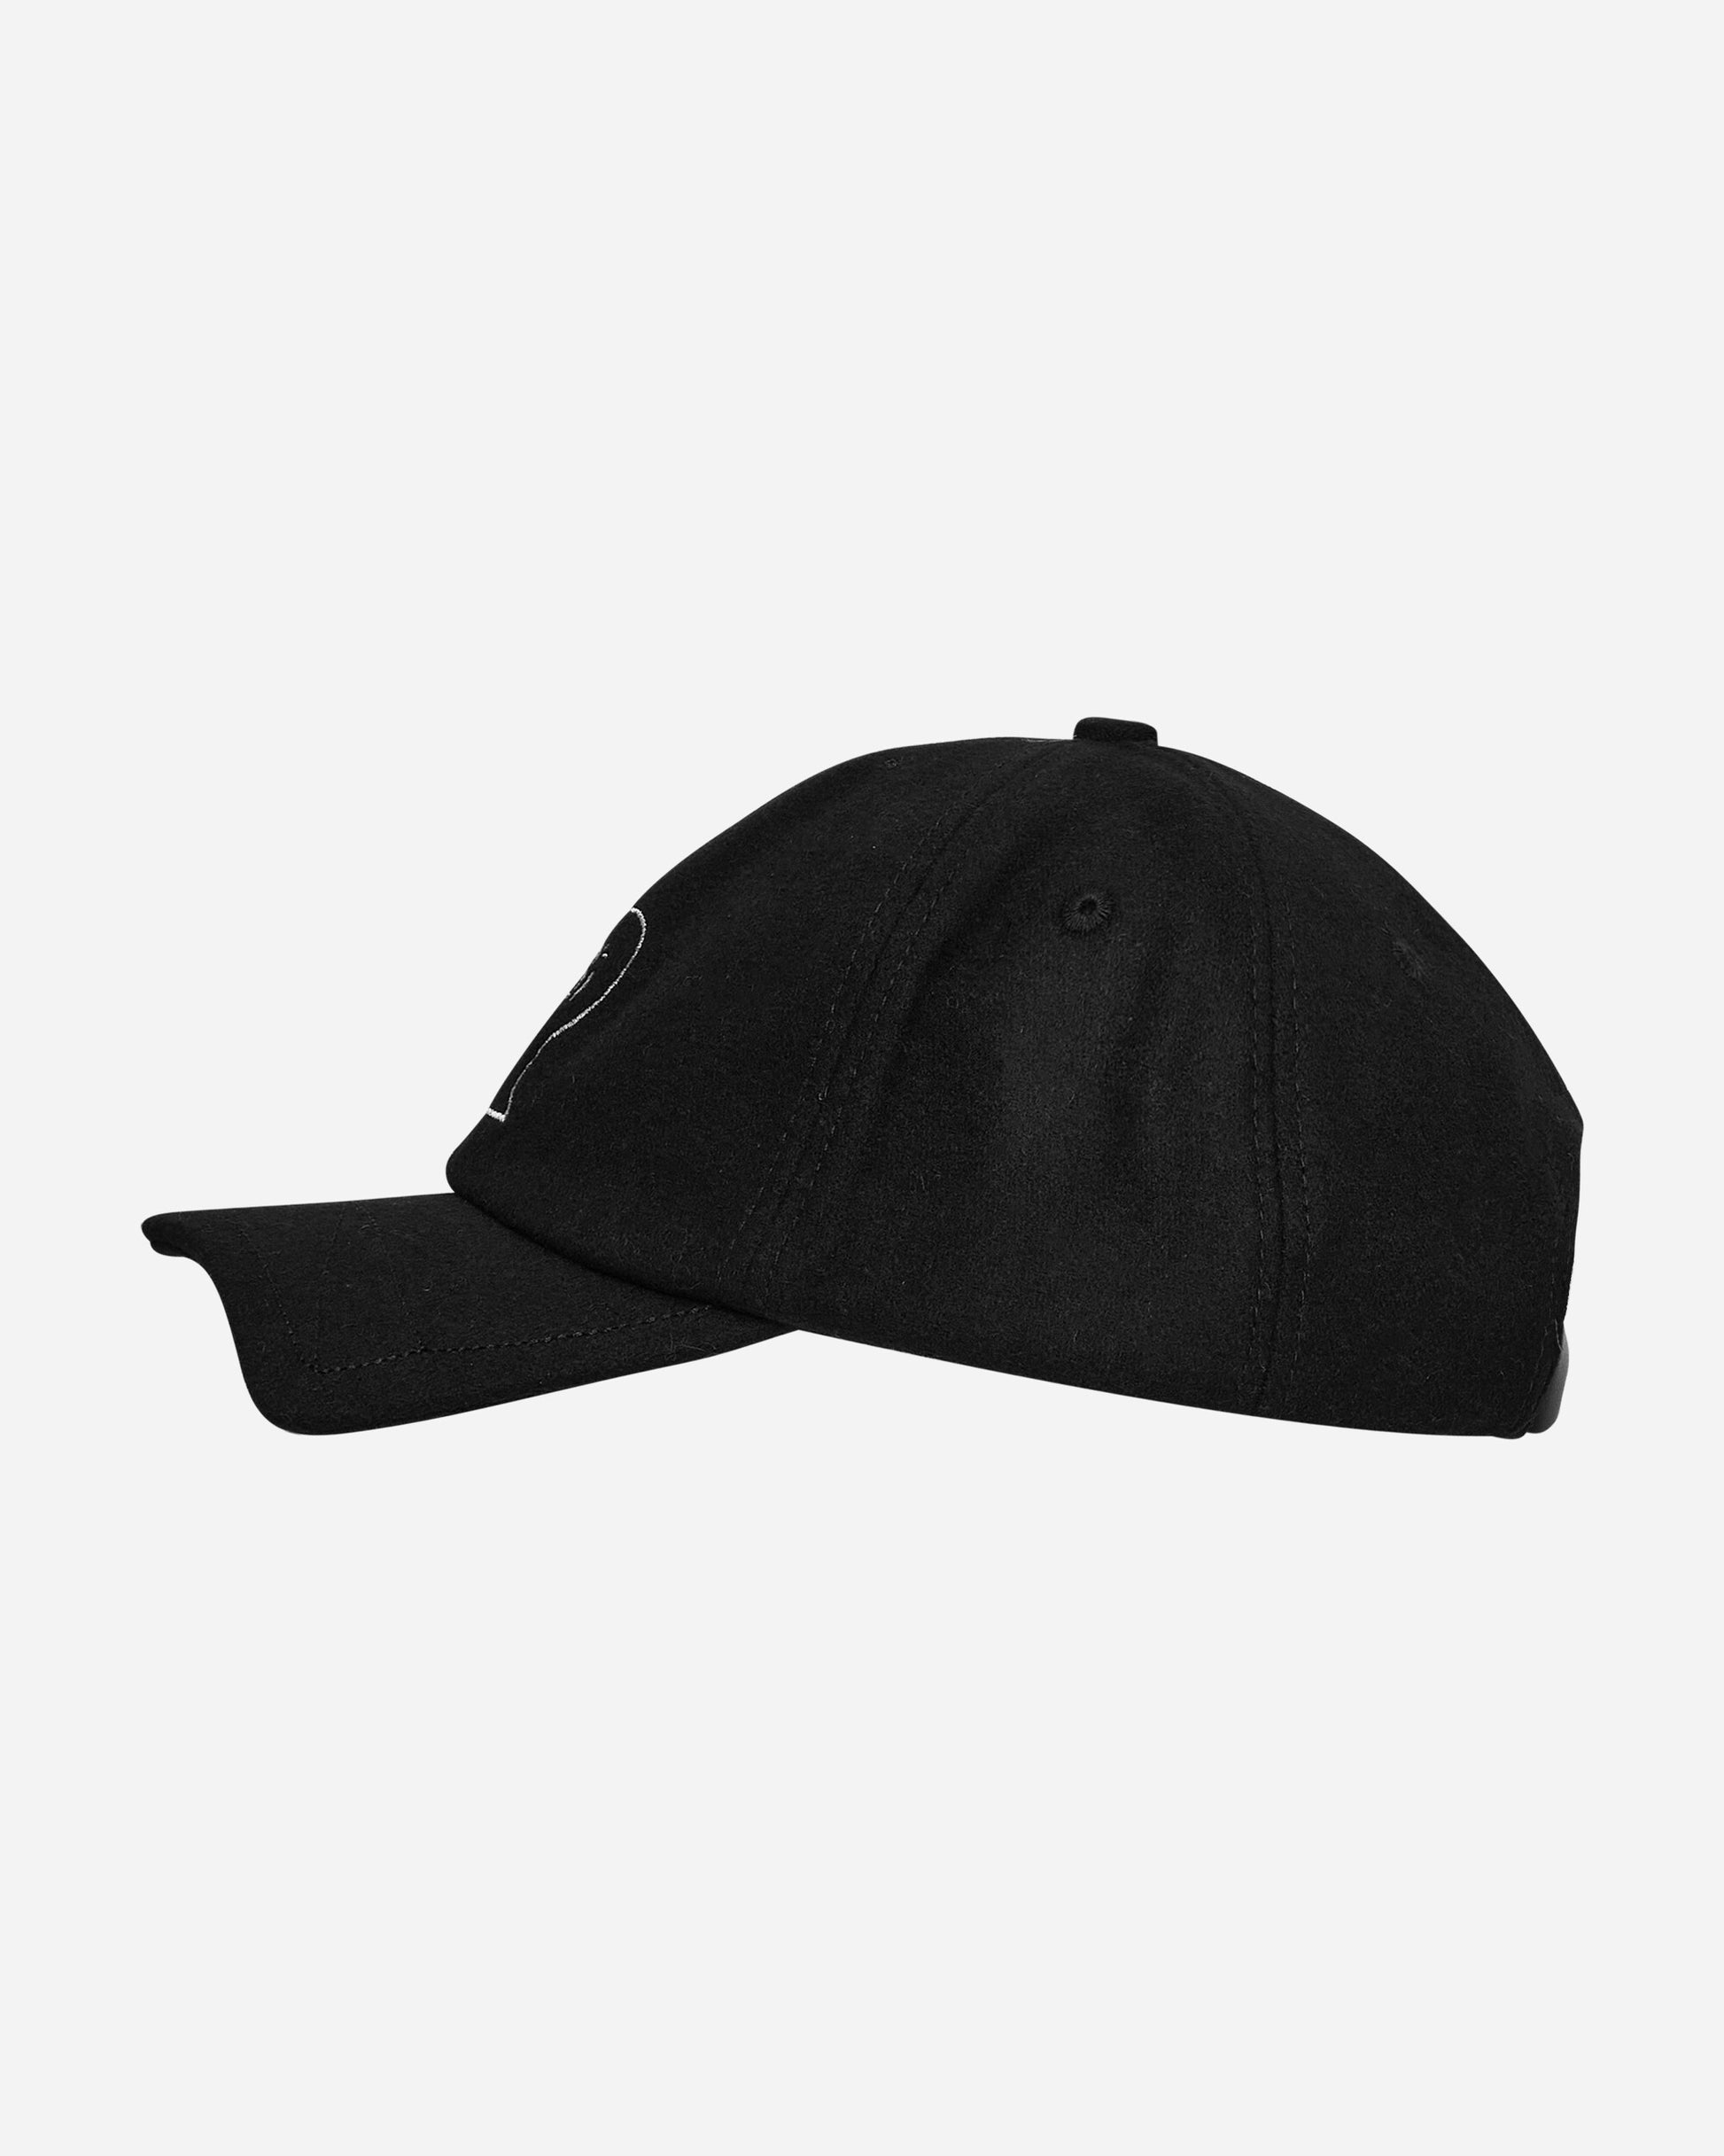 Brain Dead Batwing Logohead Hat Black Hats Caps H01003783BK BLACK